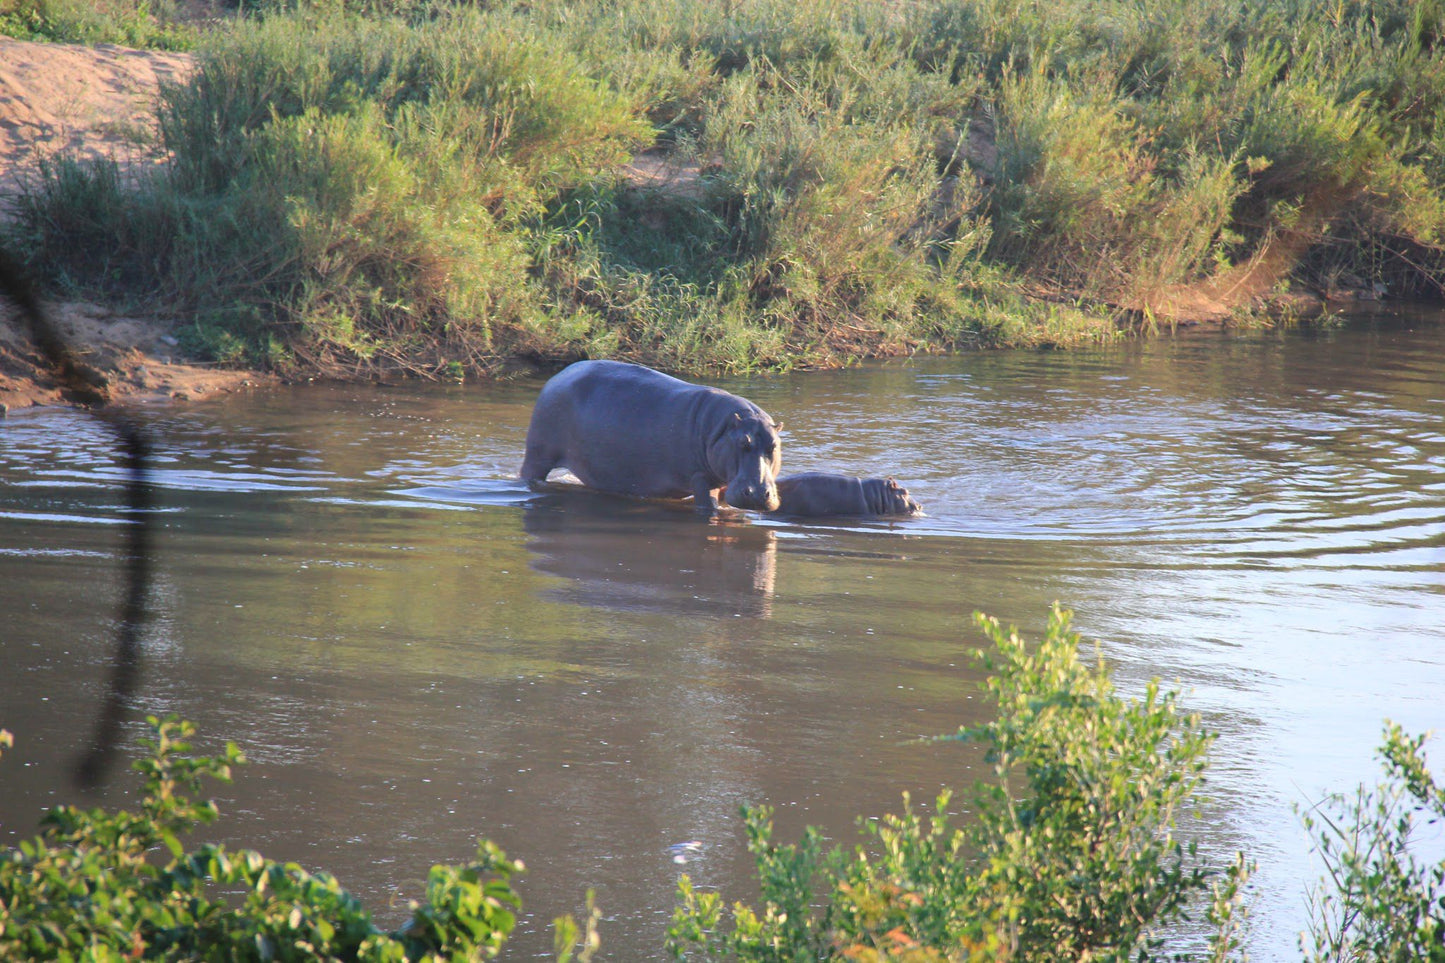 Khandizwe River Lodge Malelane Mpumalanga South Africa Hippo, Mammal, Animal, Herbivore, River, Nature, Waters, Water Buffalo